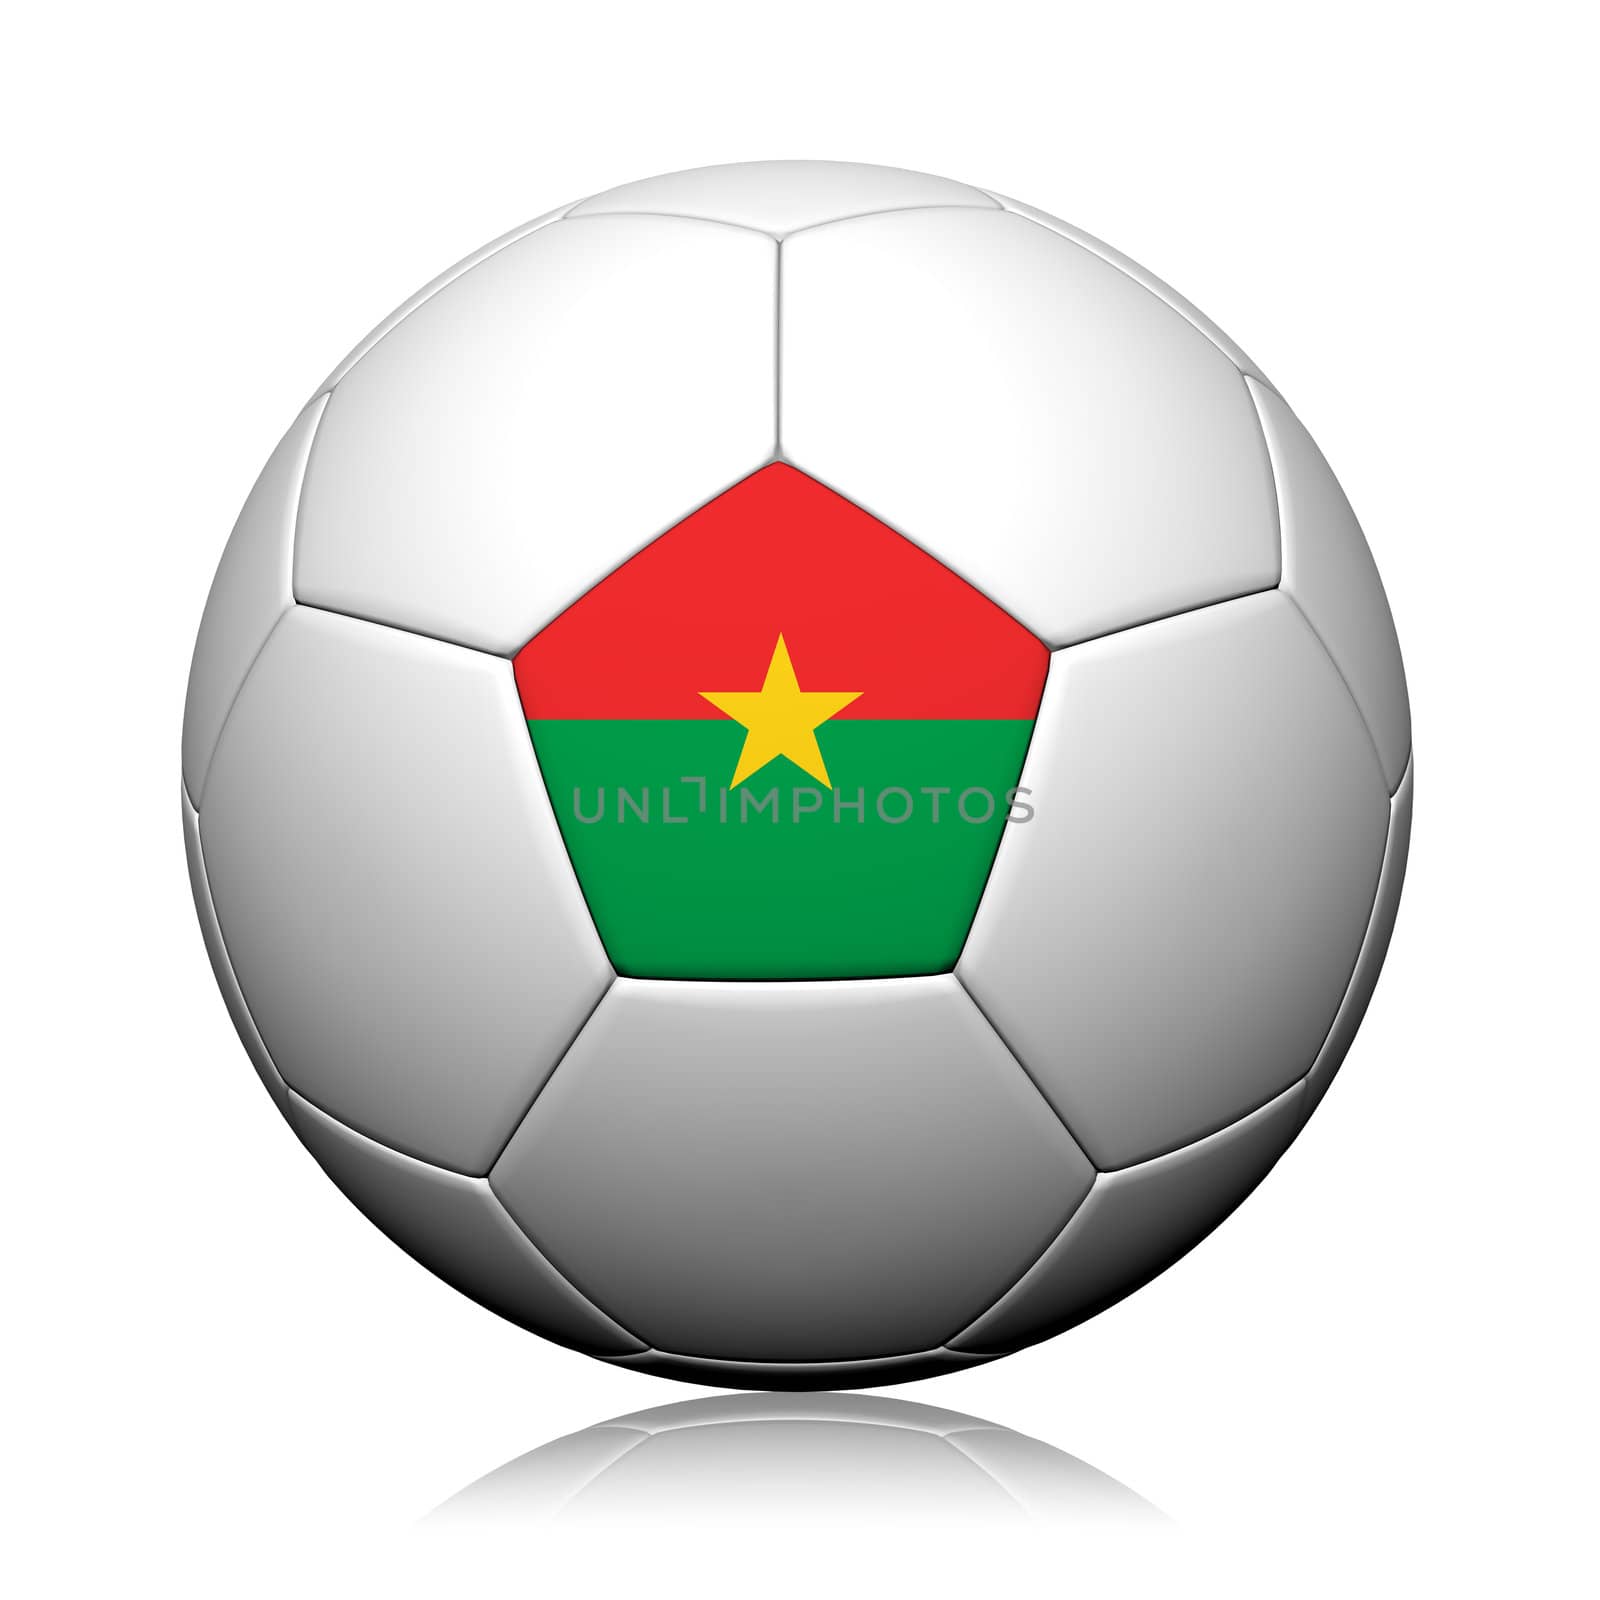 Burkina Faso Flag Pattern 3d rendering of a soccer ball